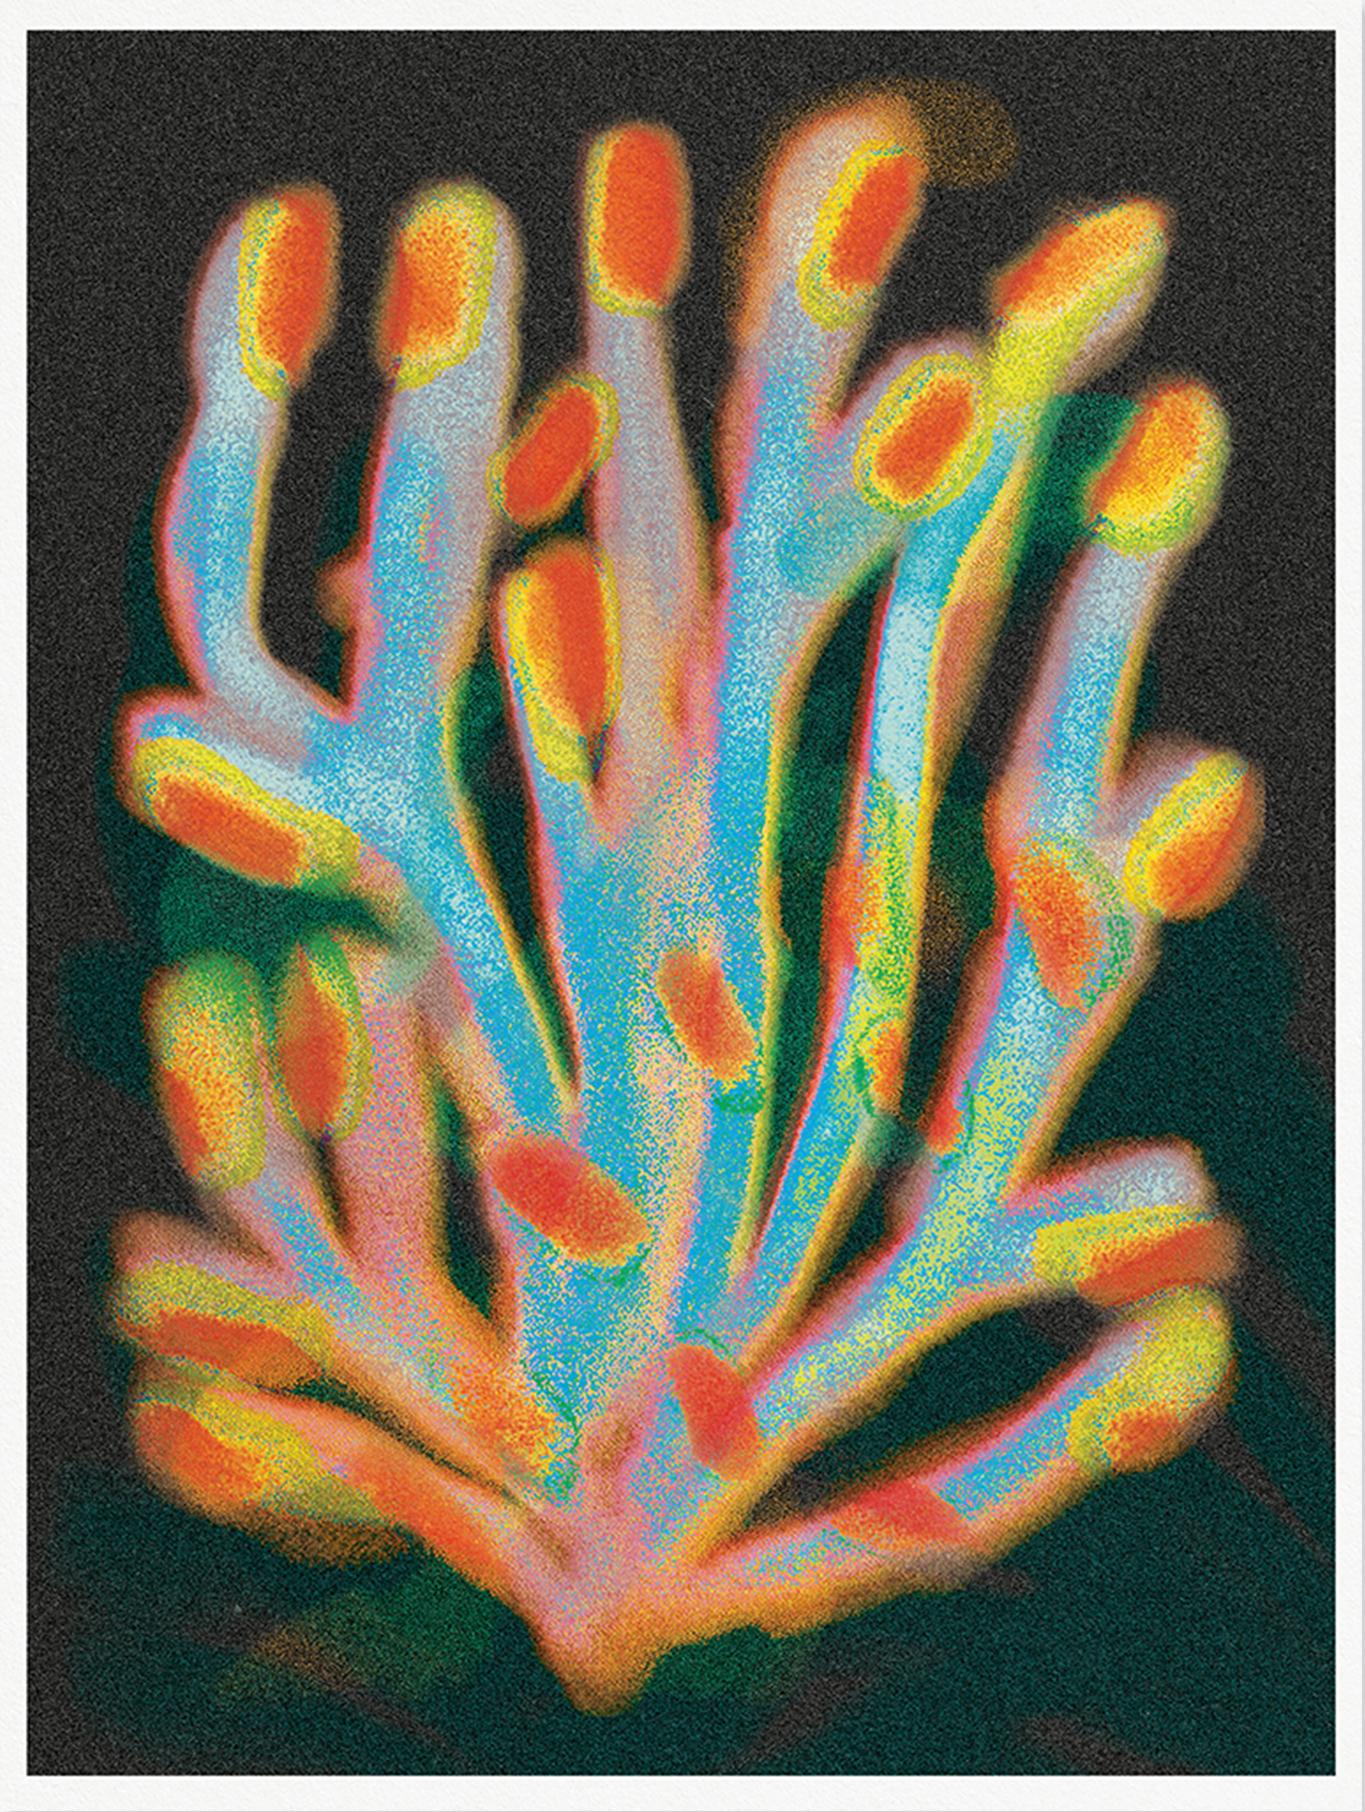 4 color riso prints by Melissa Santamaria.
11 x 14.5 in
27.9 x 36.7 cm
Edition of 60.